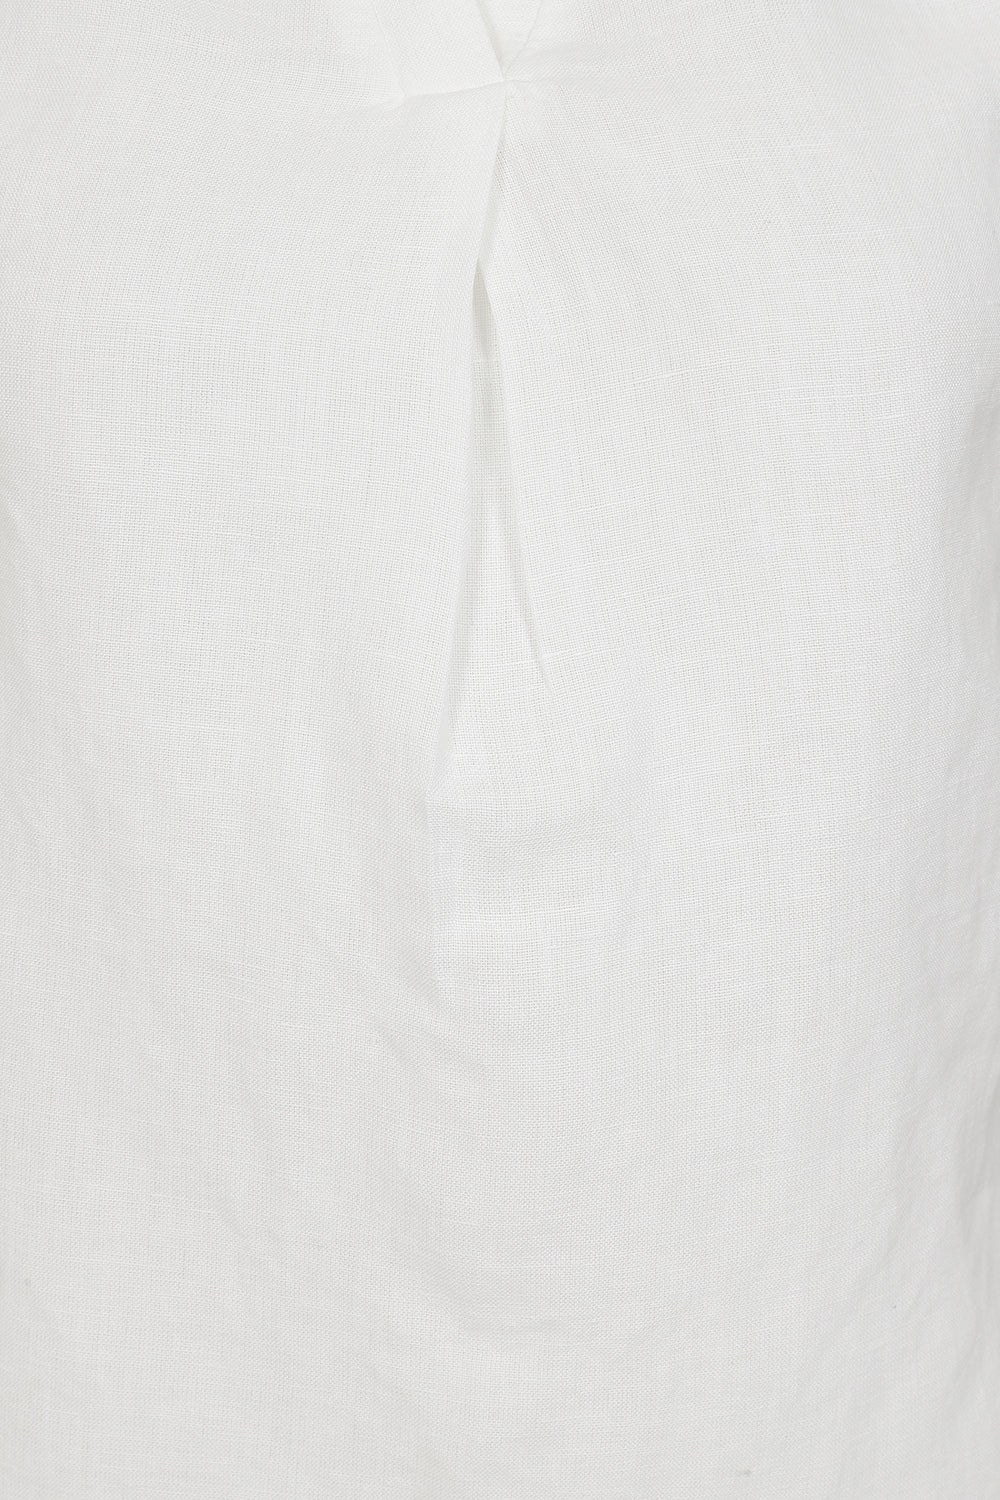 Sunrise Blouse - White - Organic Cotton Linen Blend